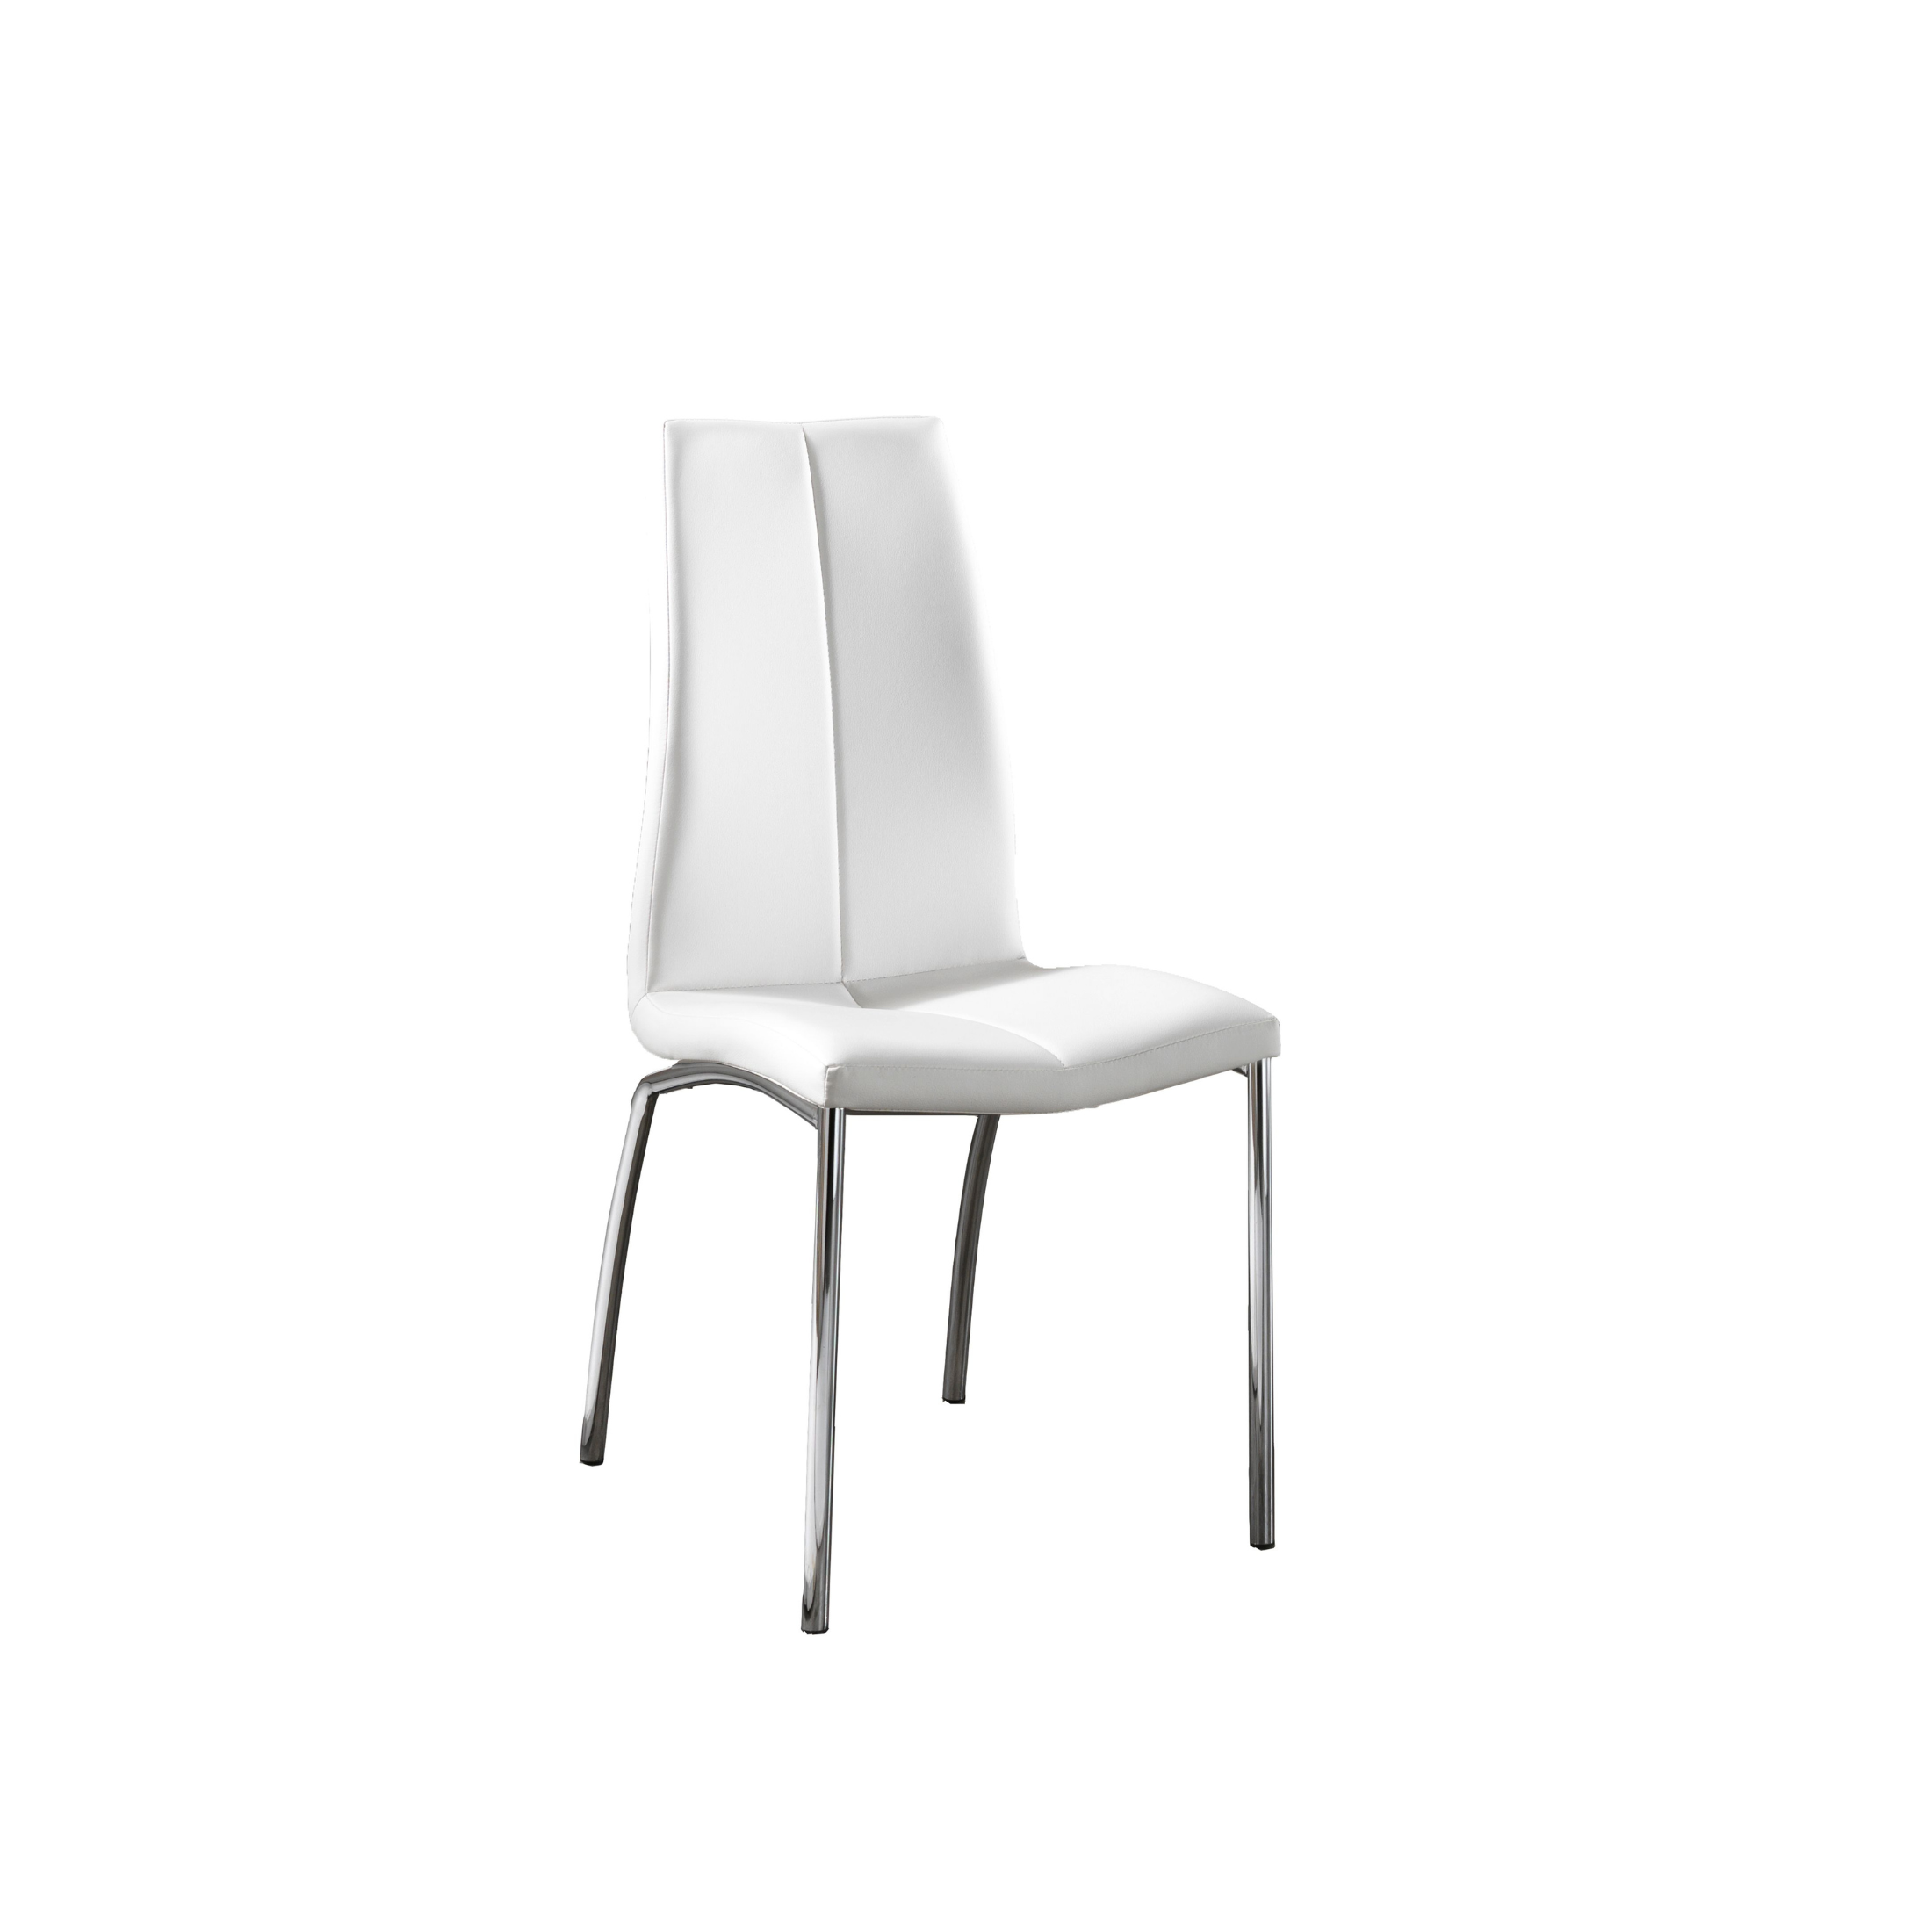 Set di sedie imbottite in similpelle "Viva" moderne con gambe in metallo cm 44x43 92h